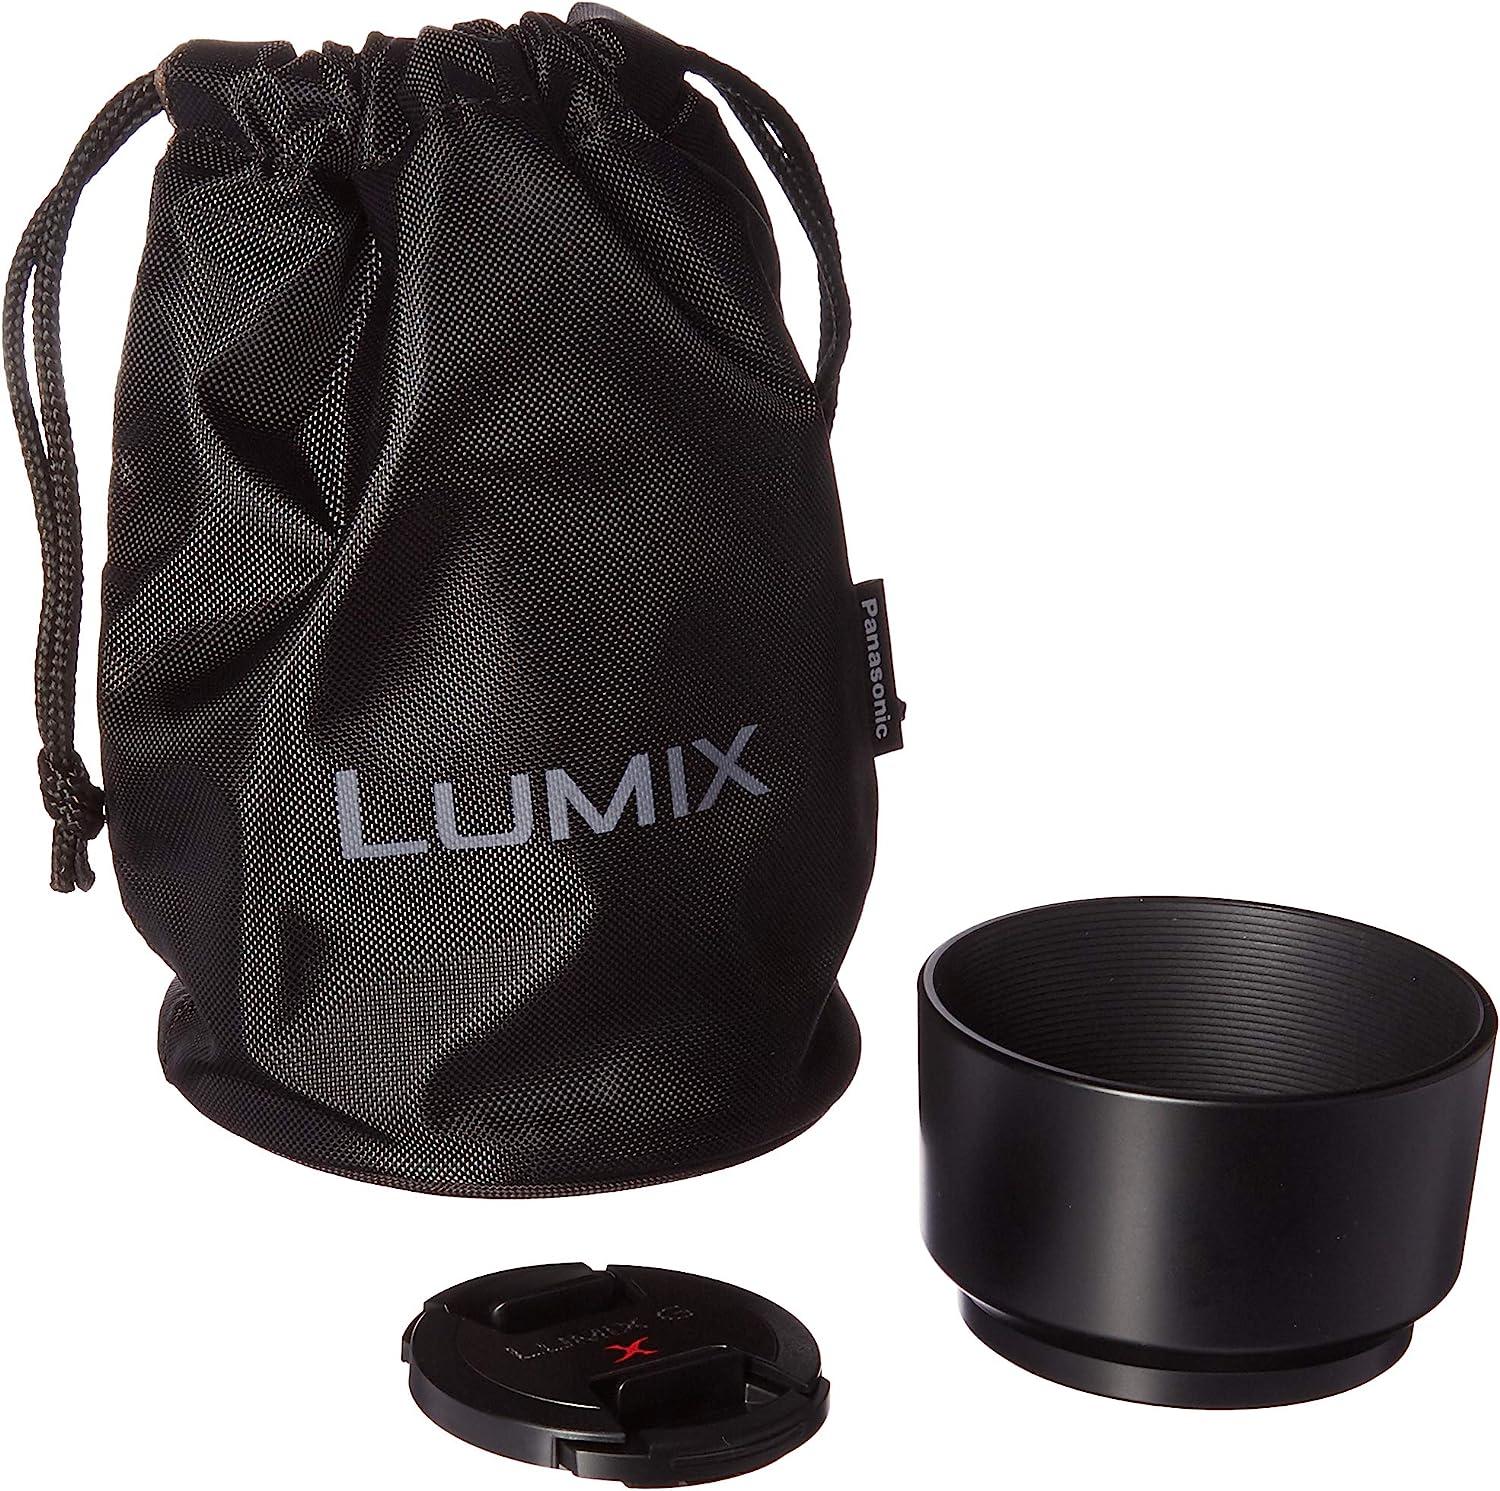 Panasonic LUMIX G X Vario Power Zoom Lens, 45-175MM, F4.0-5.6 ASPH